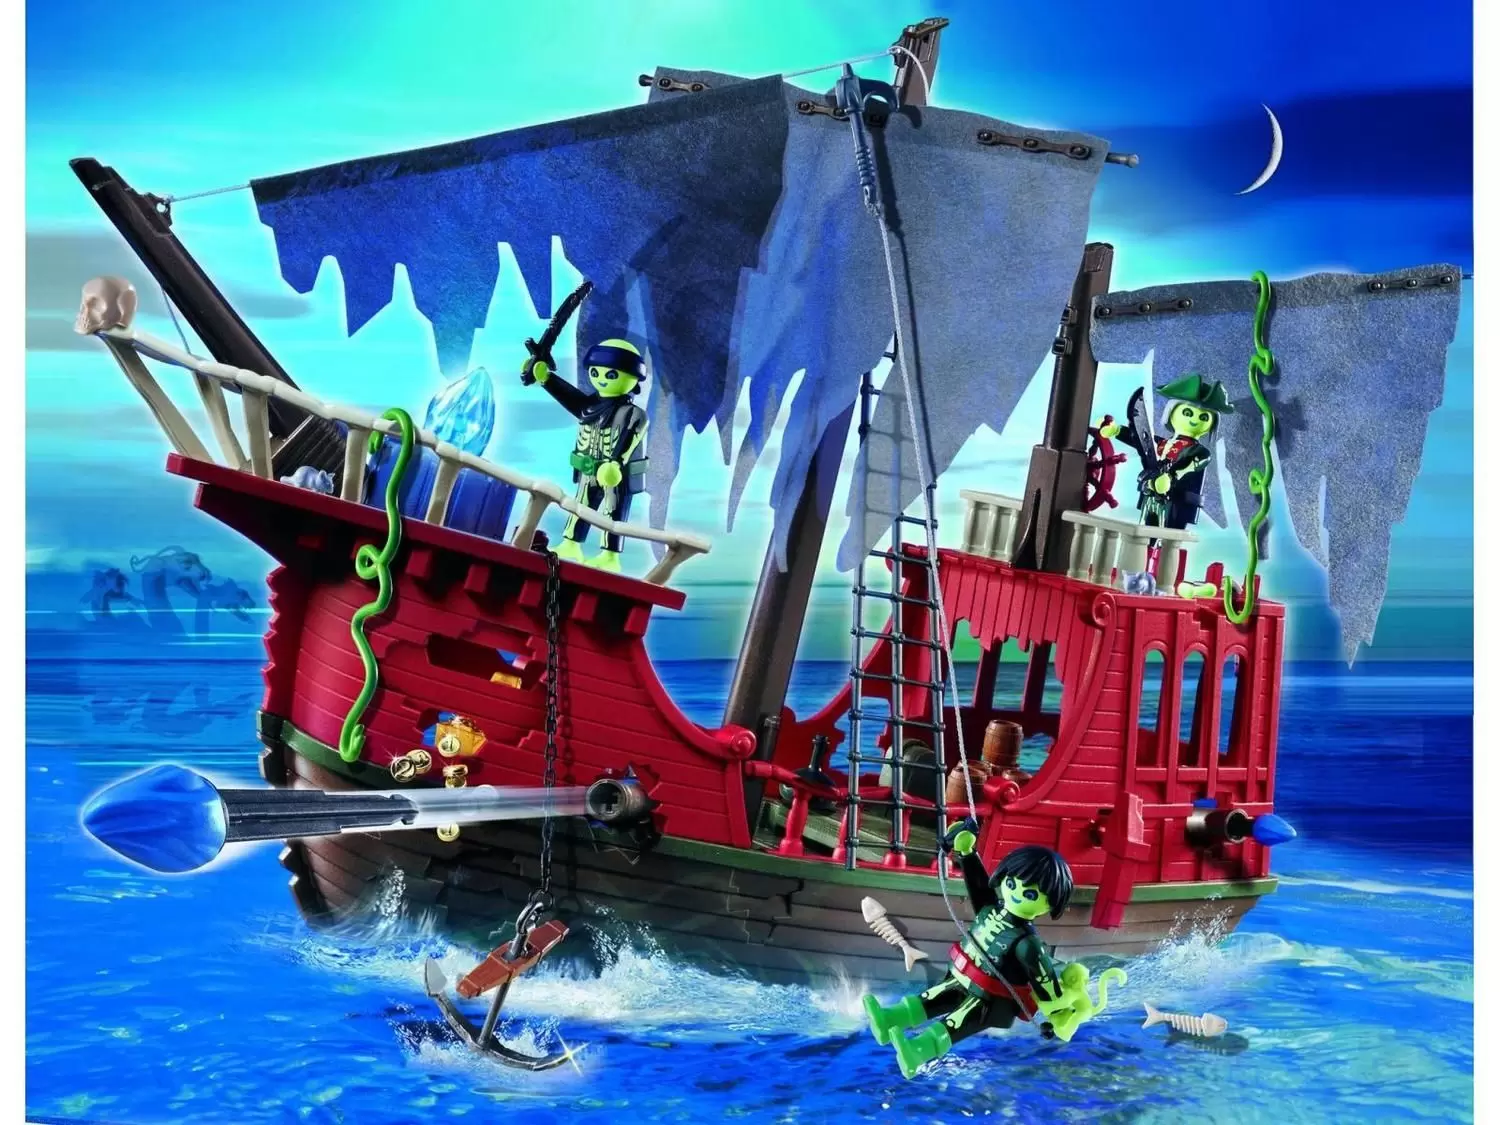 Pirate Playmobil - Ghost Pirate Ship